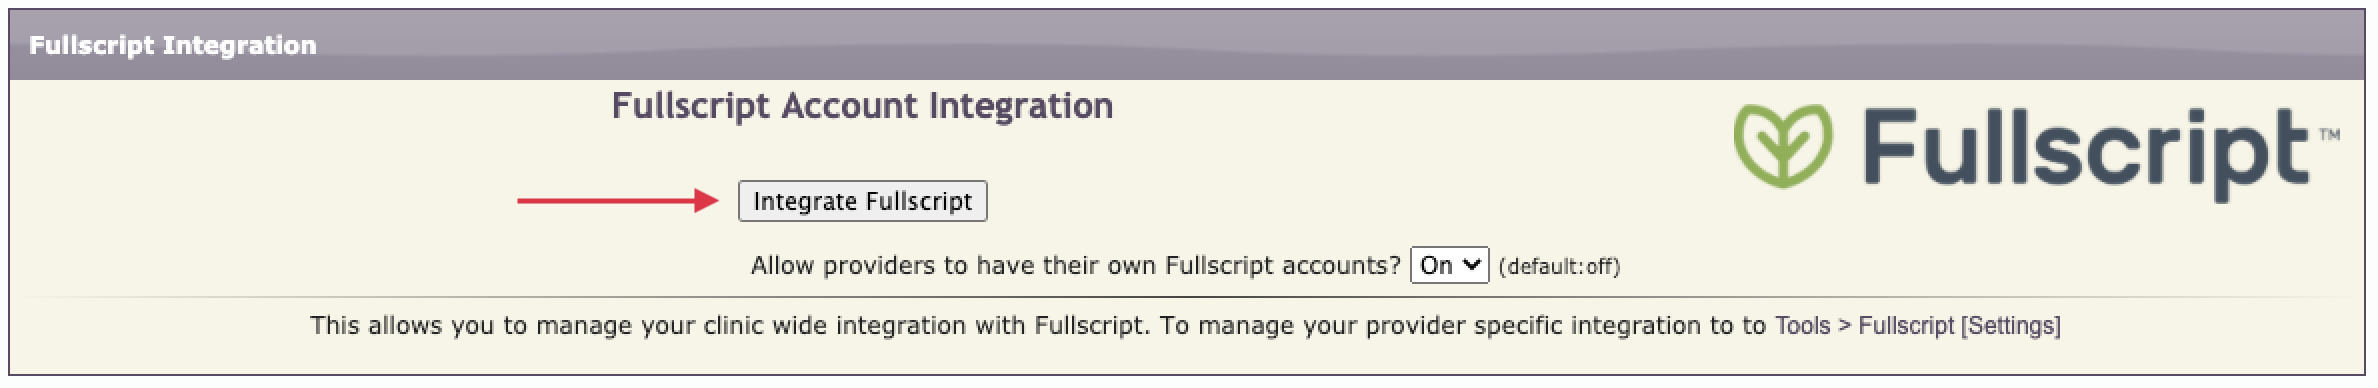 clicking integrate fullscript and entering the credentials for the fullscript dispensary